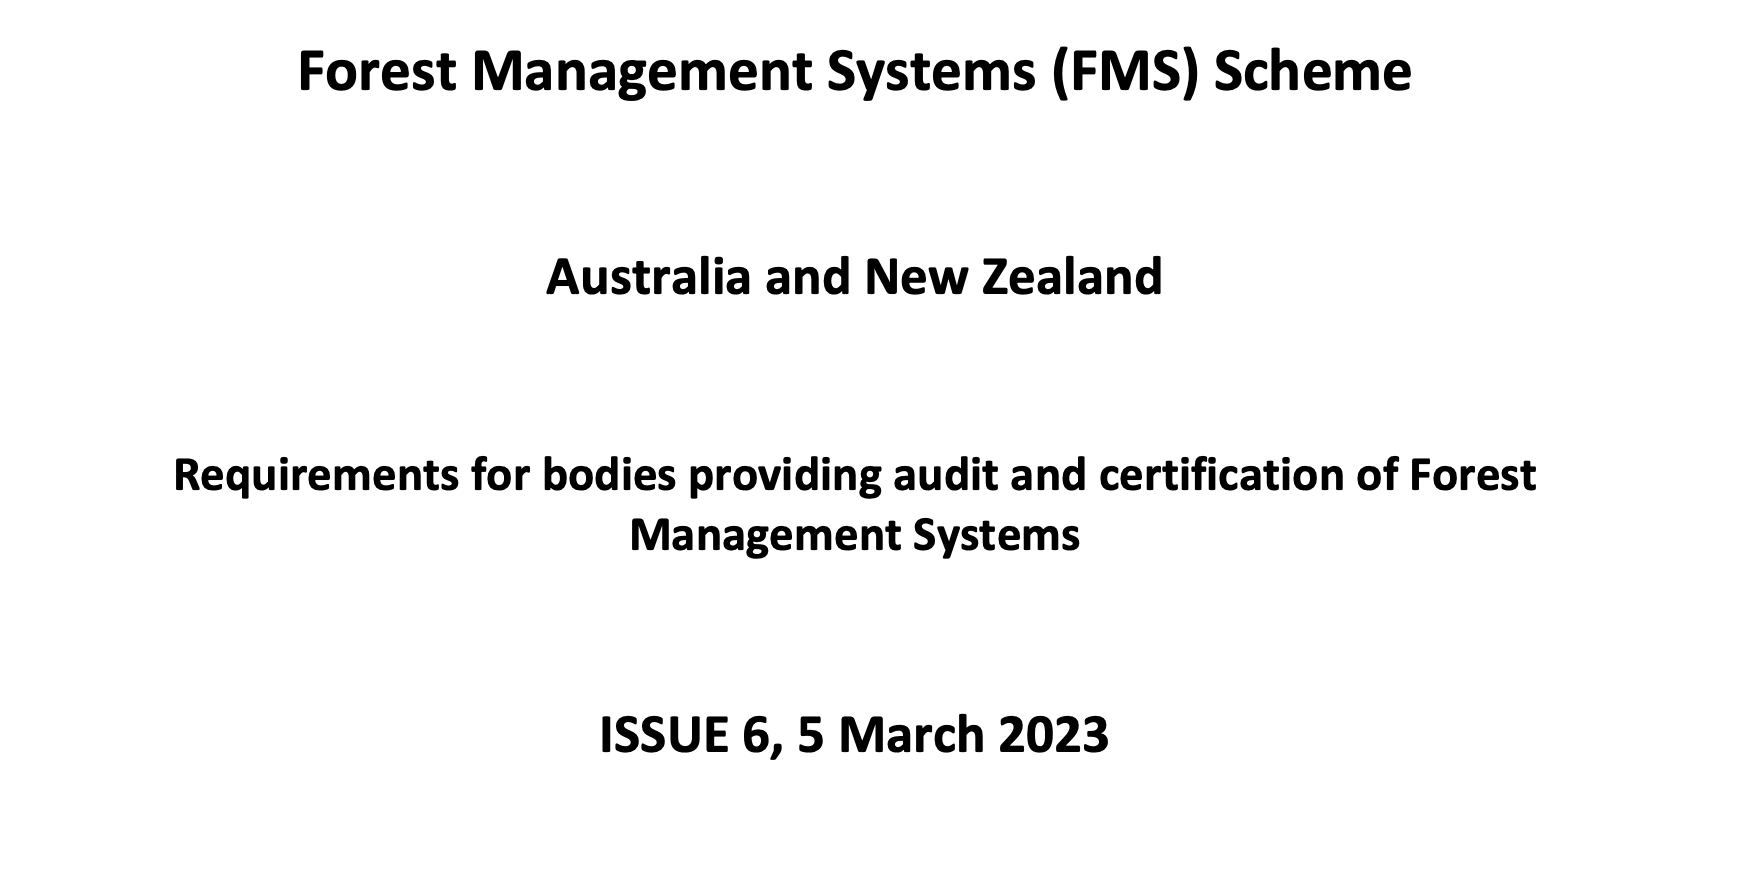 Forest Management Systems Scheme ISSUE 6, 5 March 2023